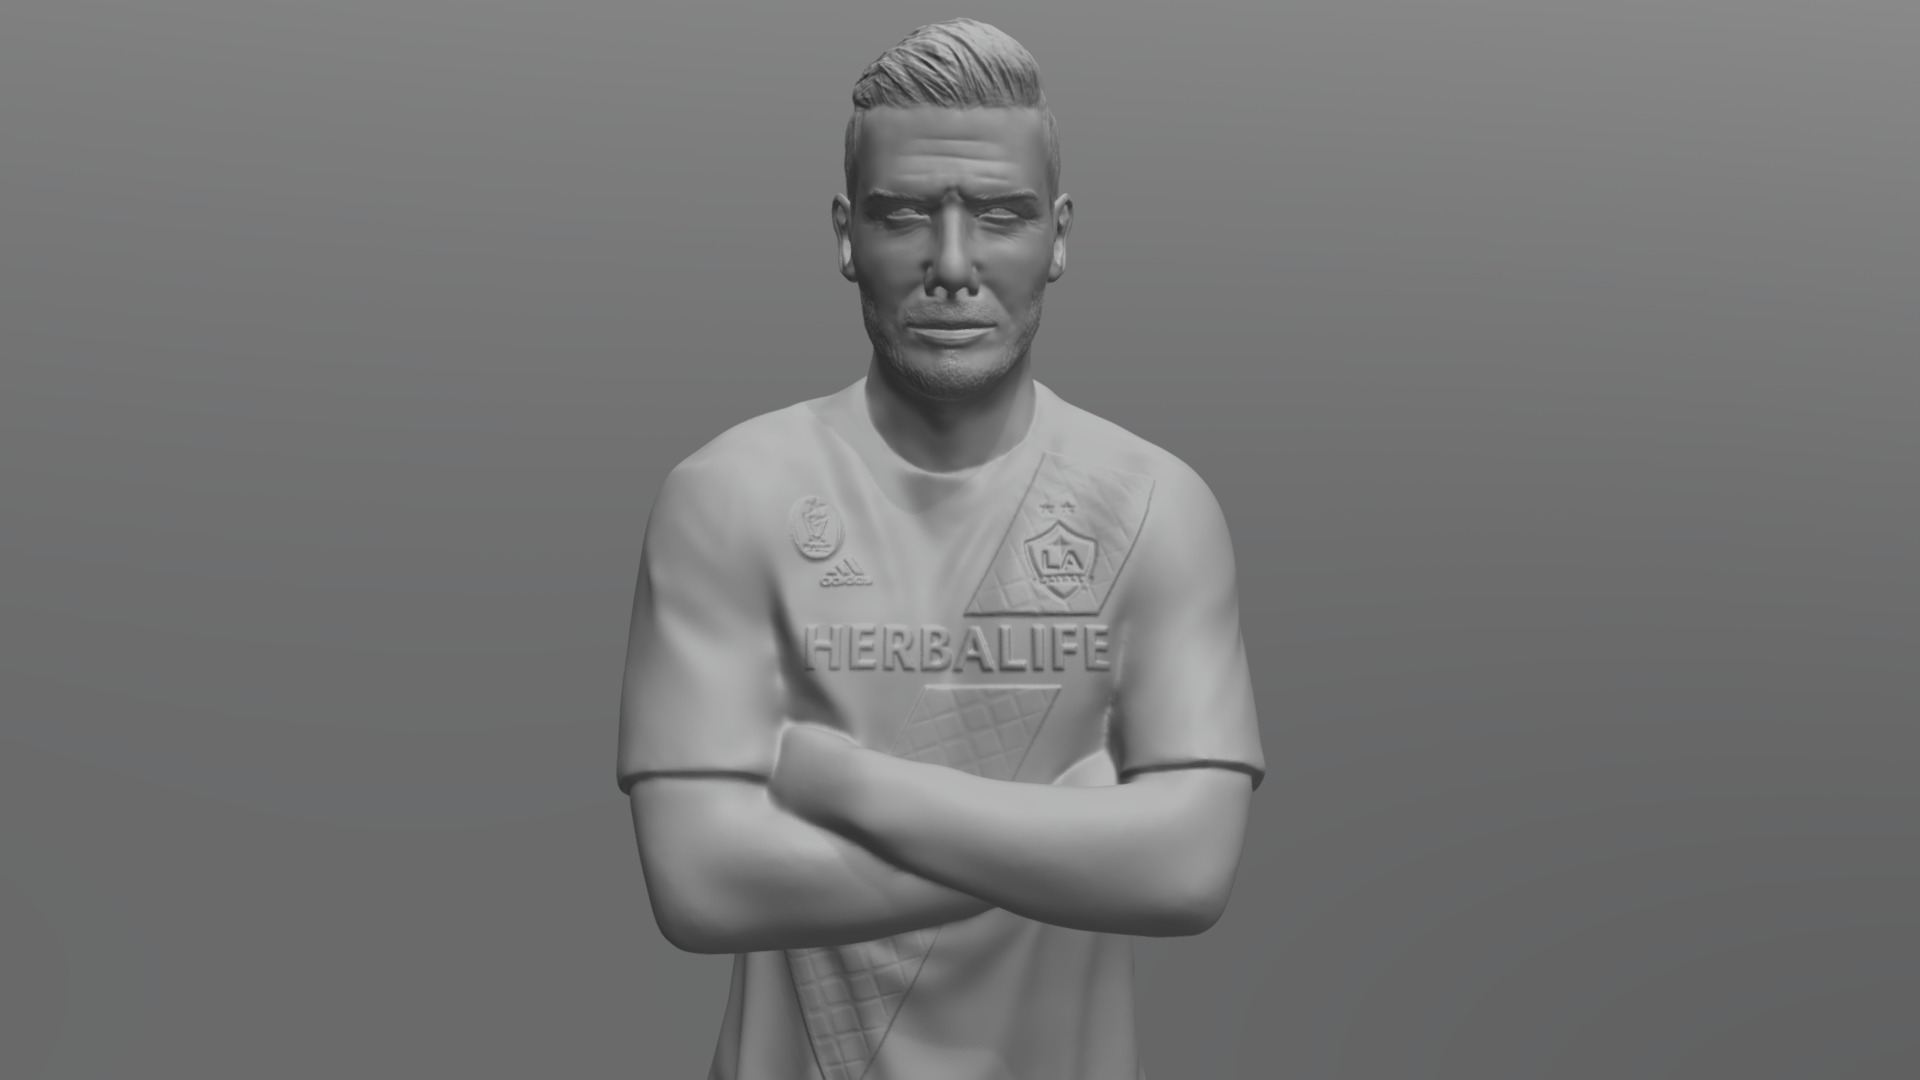 3D model David Beckham ready for 3D printing - This is a 3D model of the David Beckham ready for 3D printing. The 3D model is about a person in a tank top.